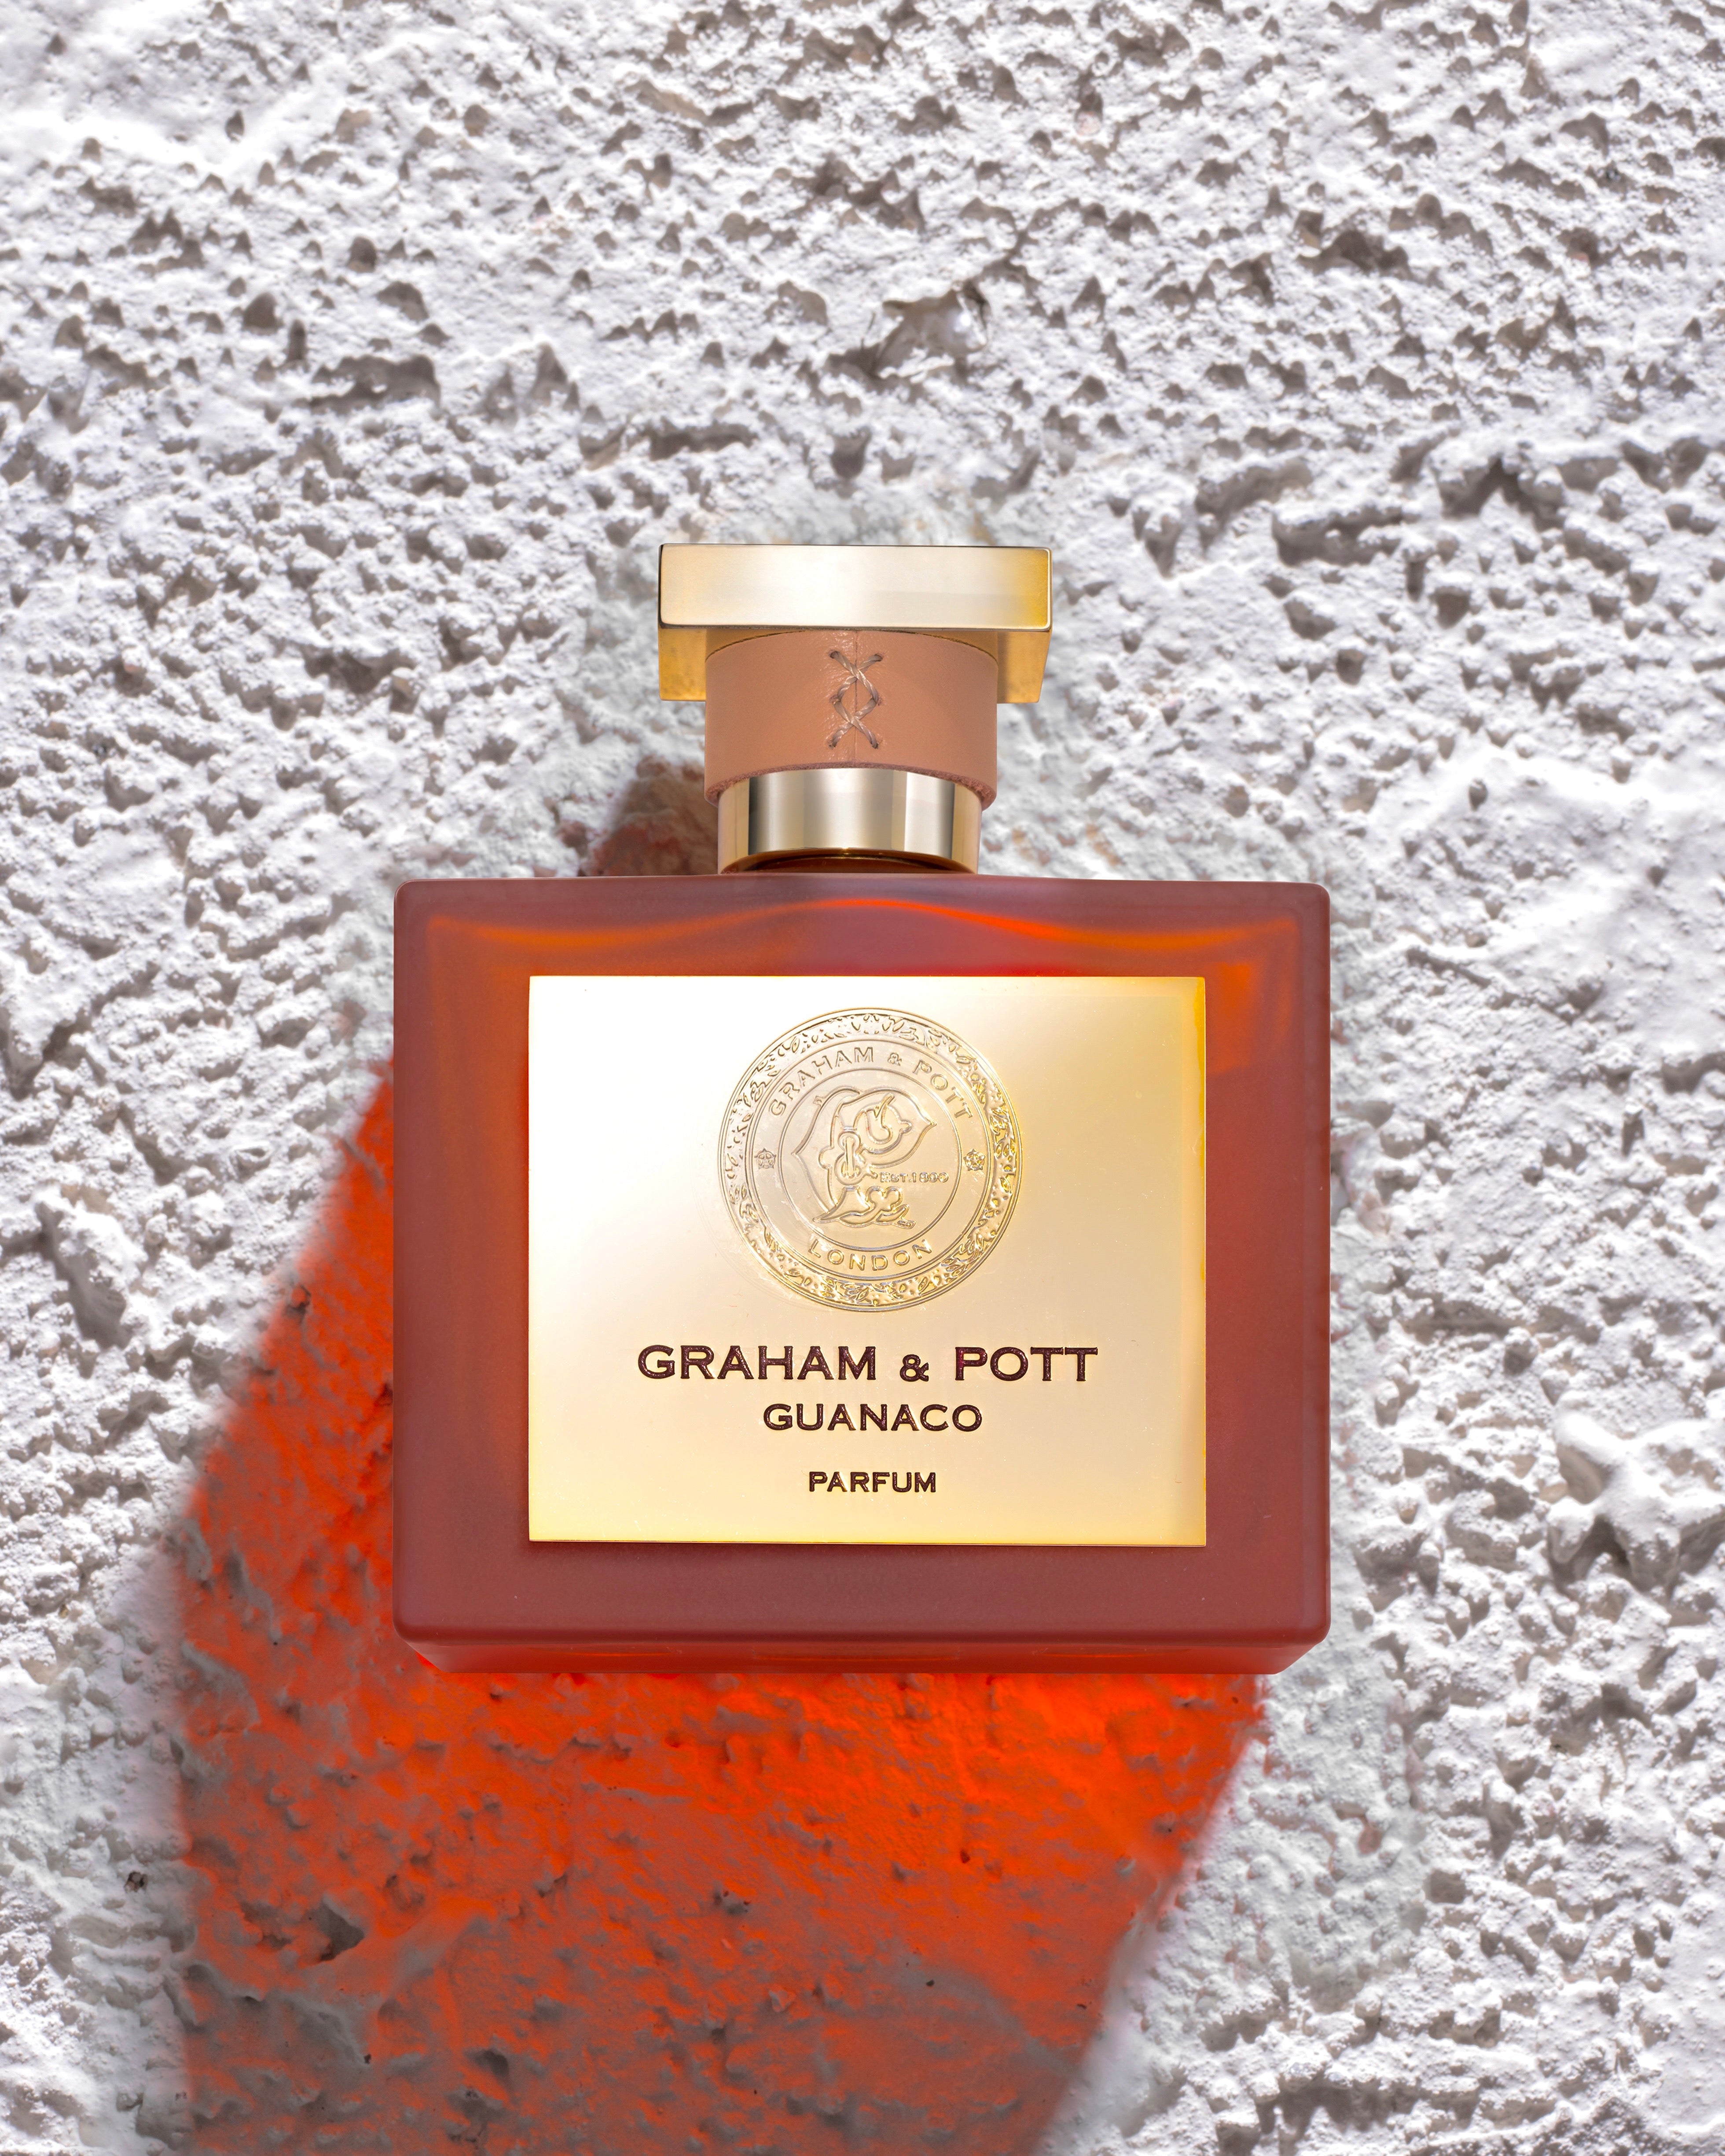 GUANACO - GRAHAM & POTT